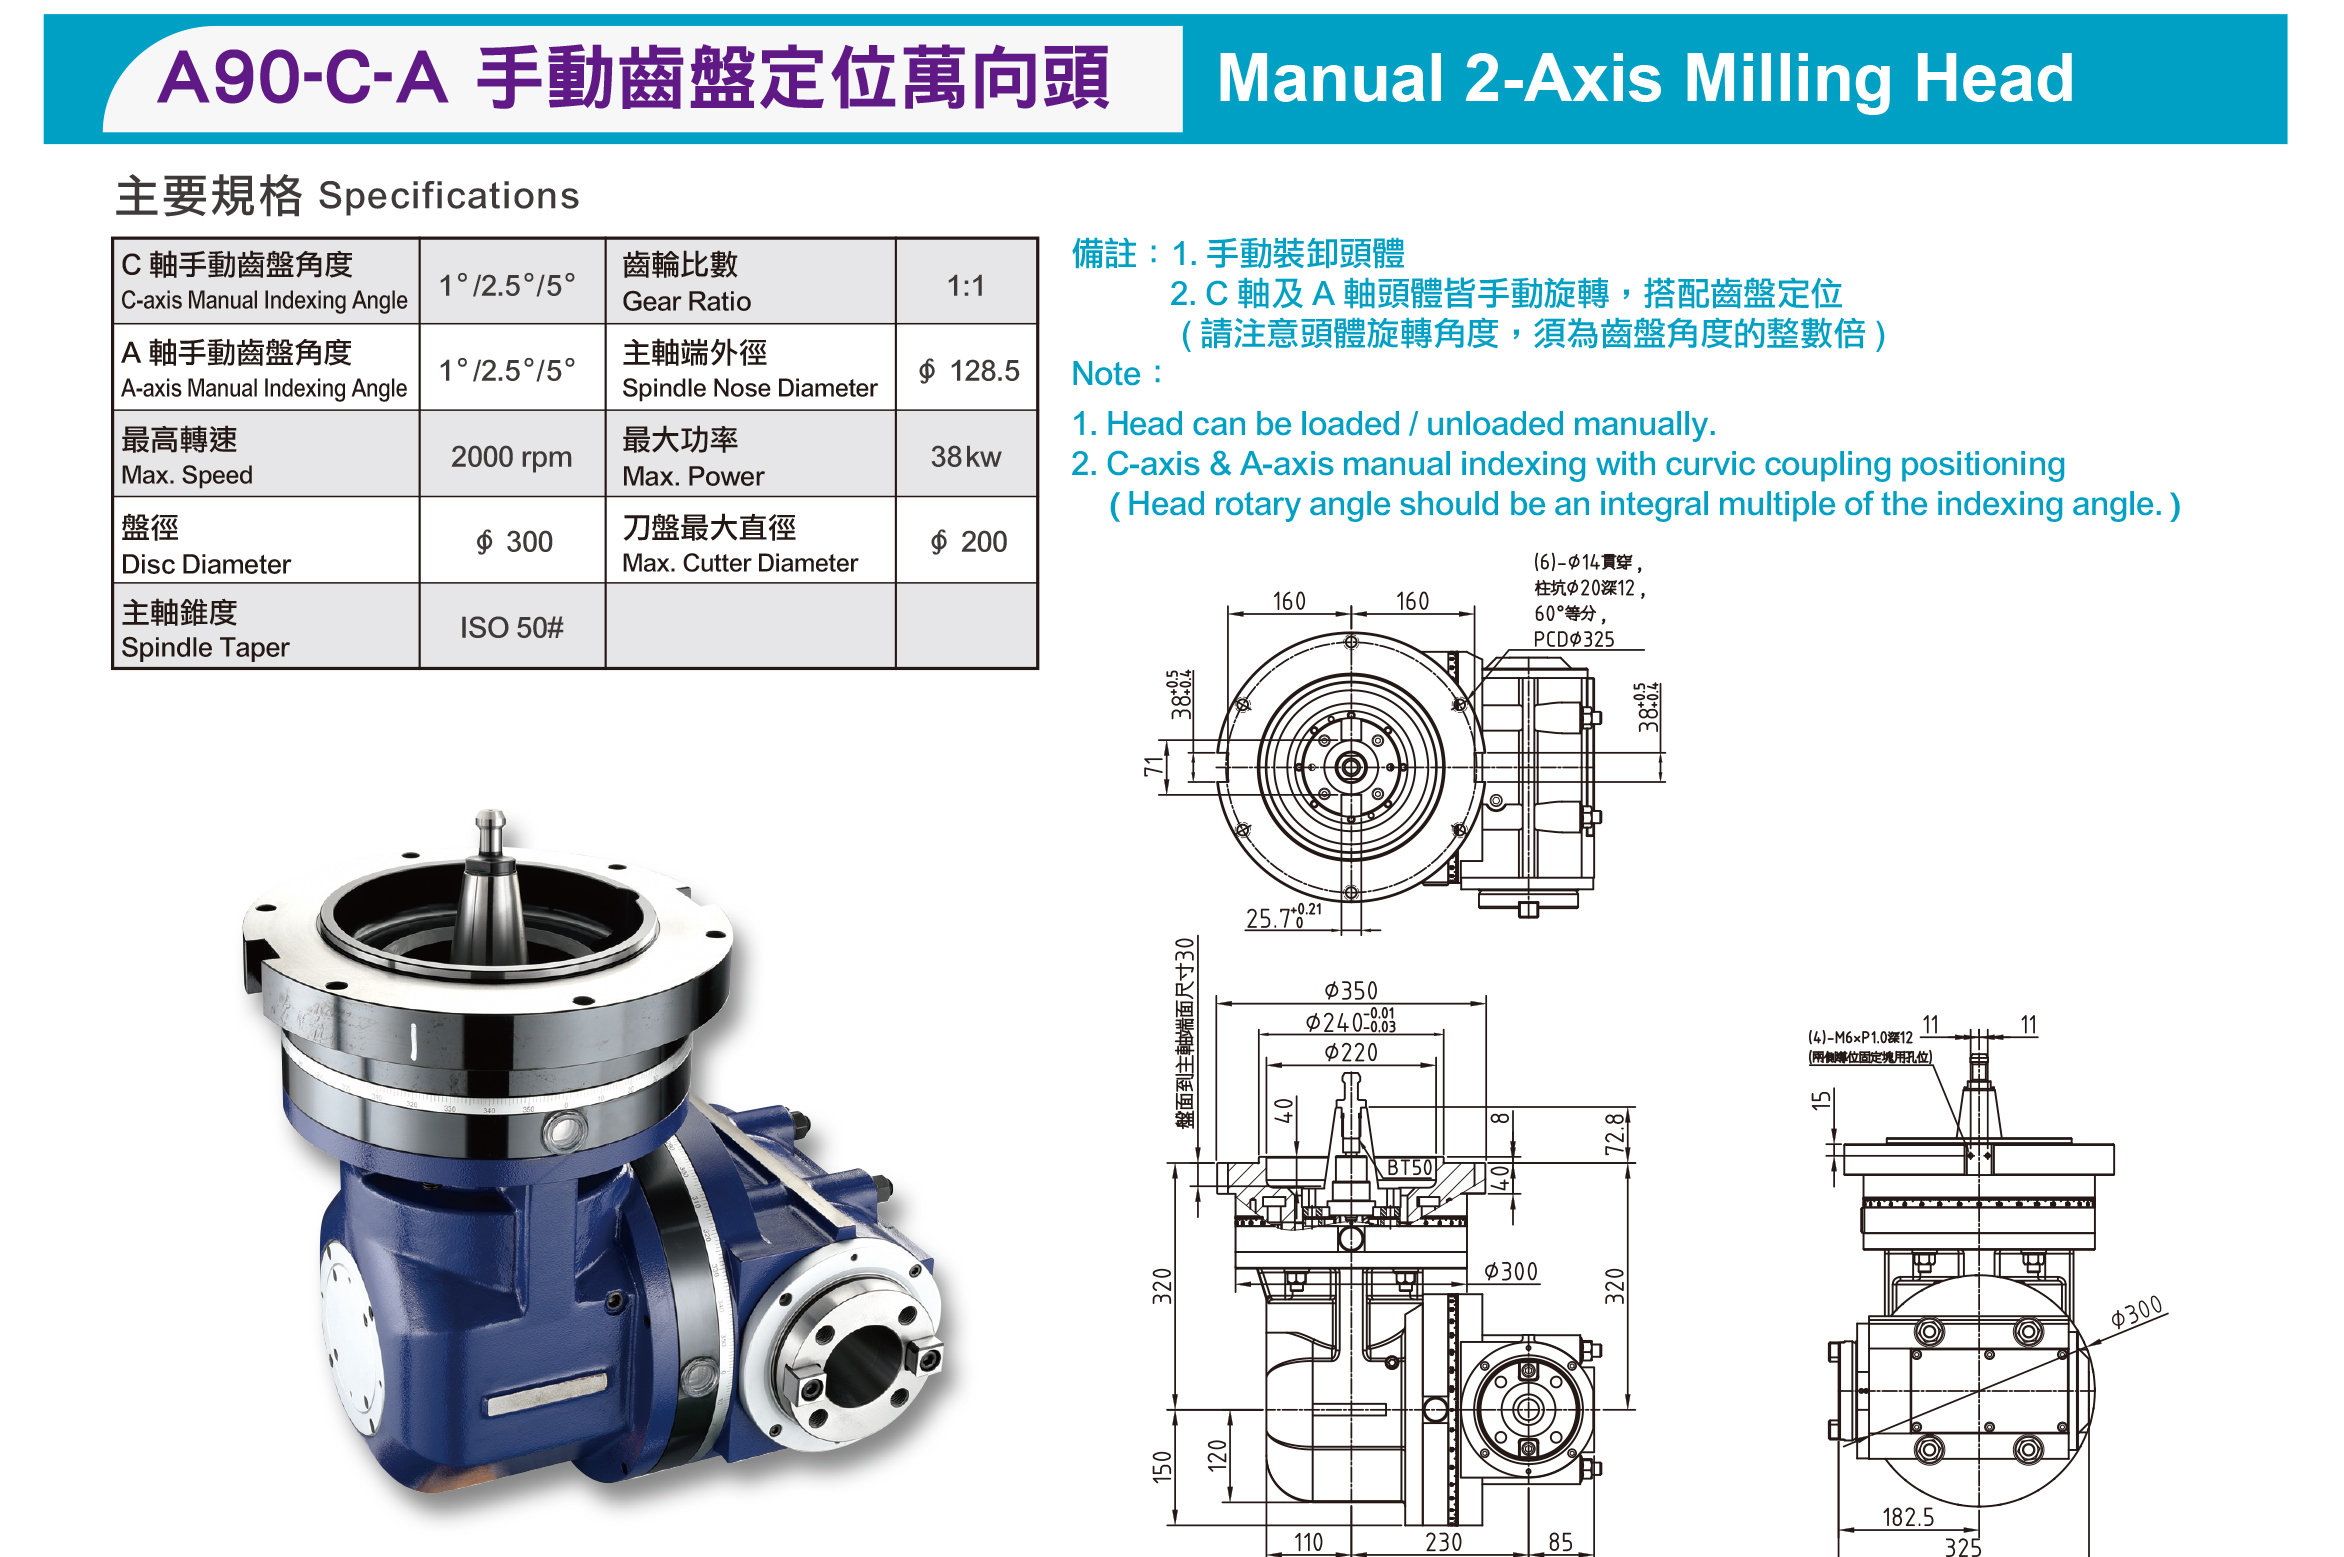 6-1-2 Manual 2-Axis Milling Head